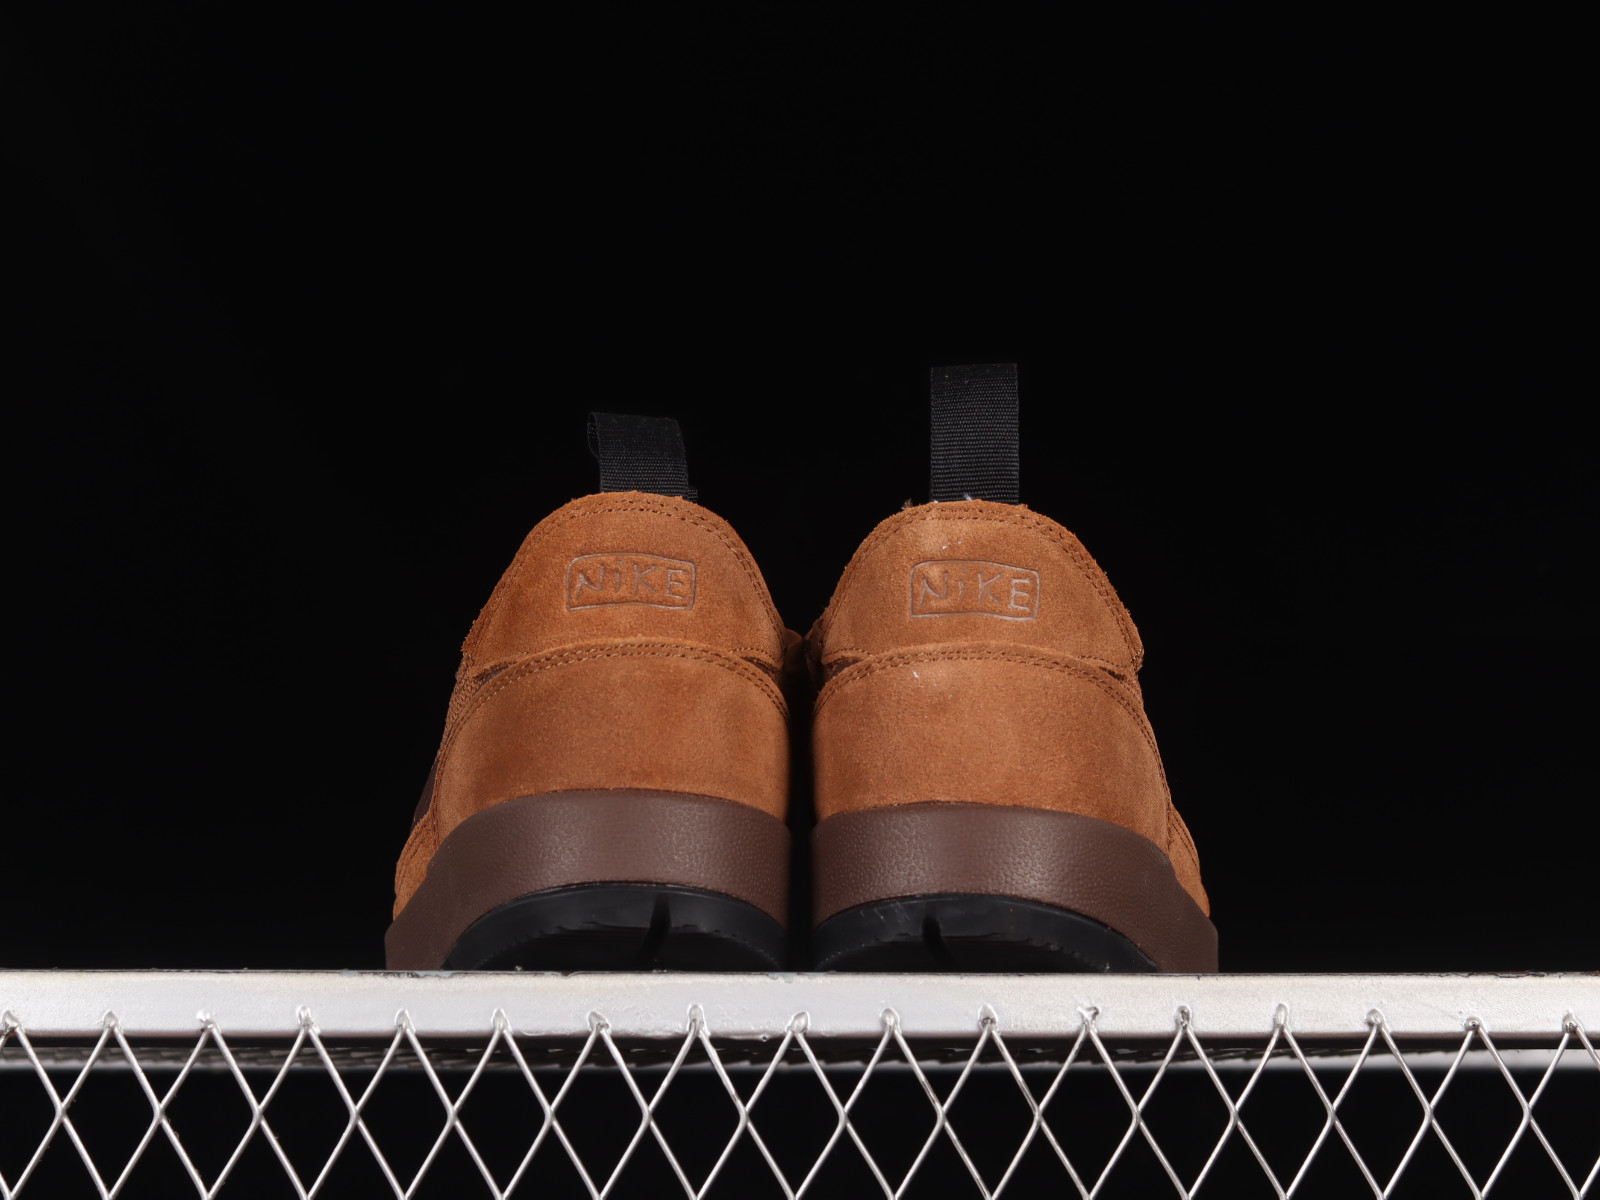 Tom Sachs x NikeCraft General Purpose Shoe Field Brown DA6672-201